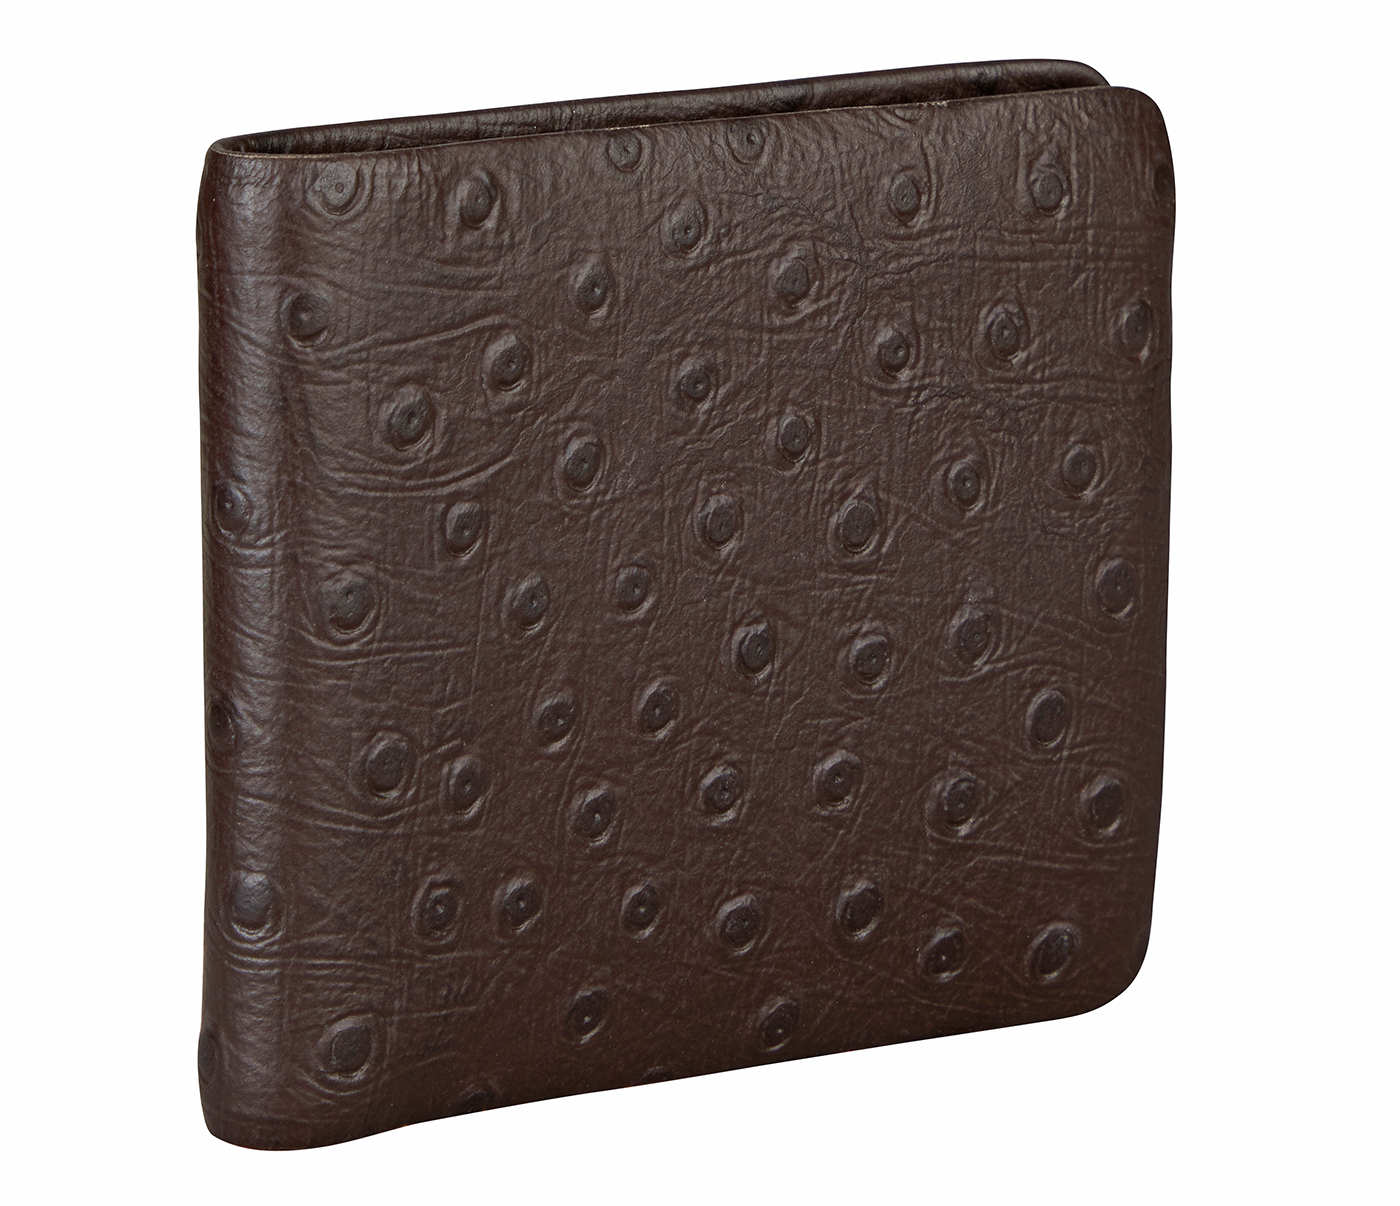 Buy Men Brown Genuine Leather Wallet Online - 746627 | Van Heusen